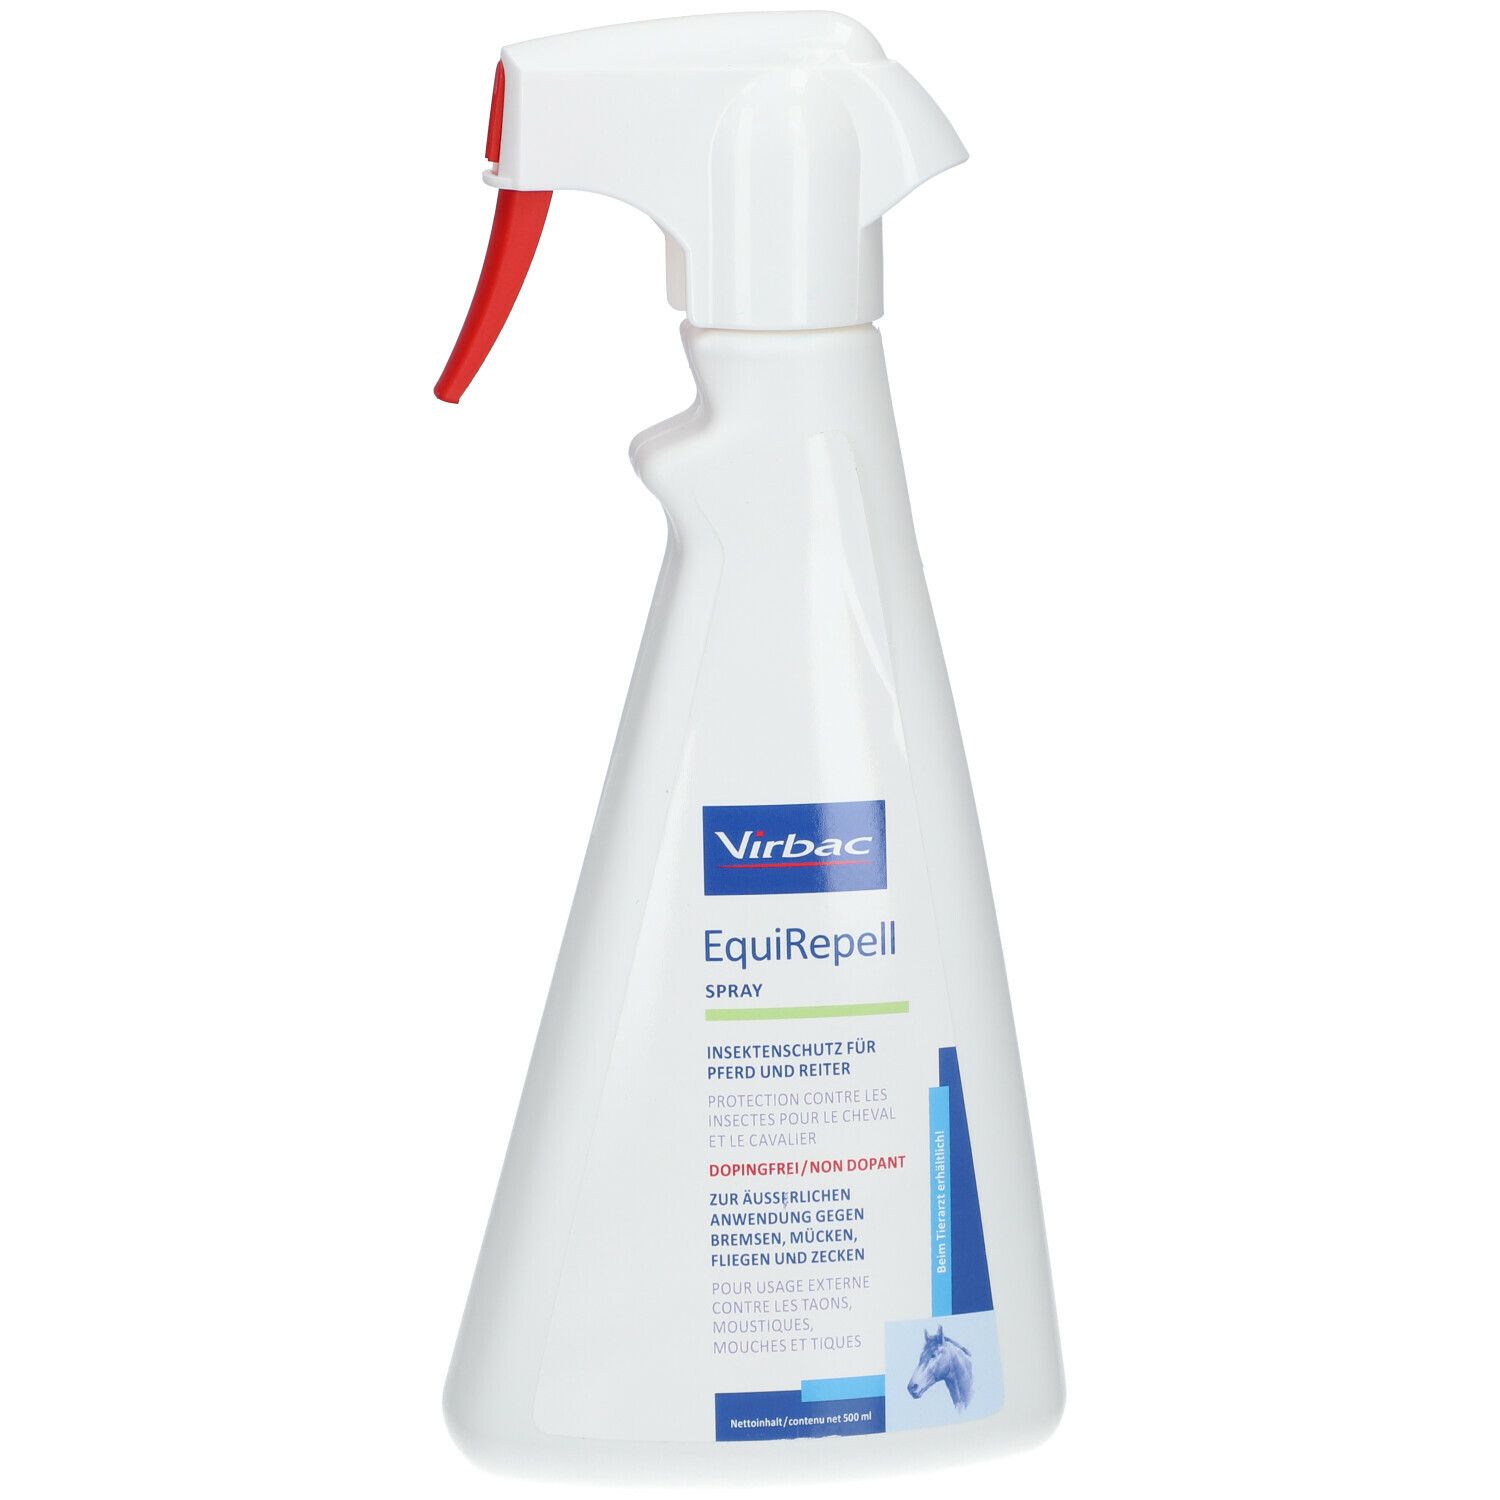 Virbac EquiRepell Spray